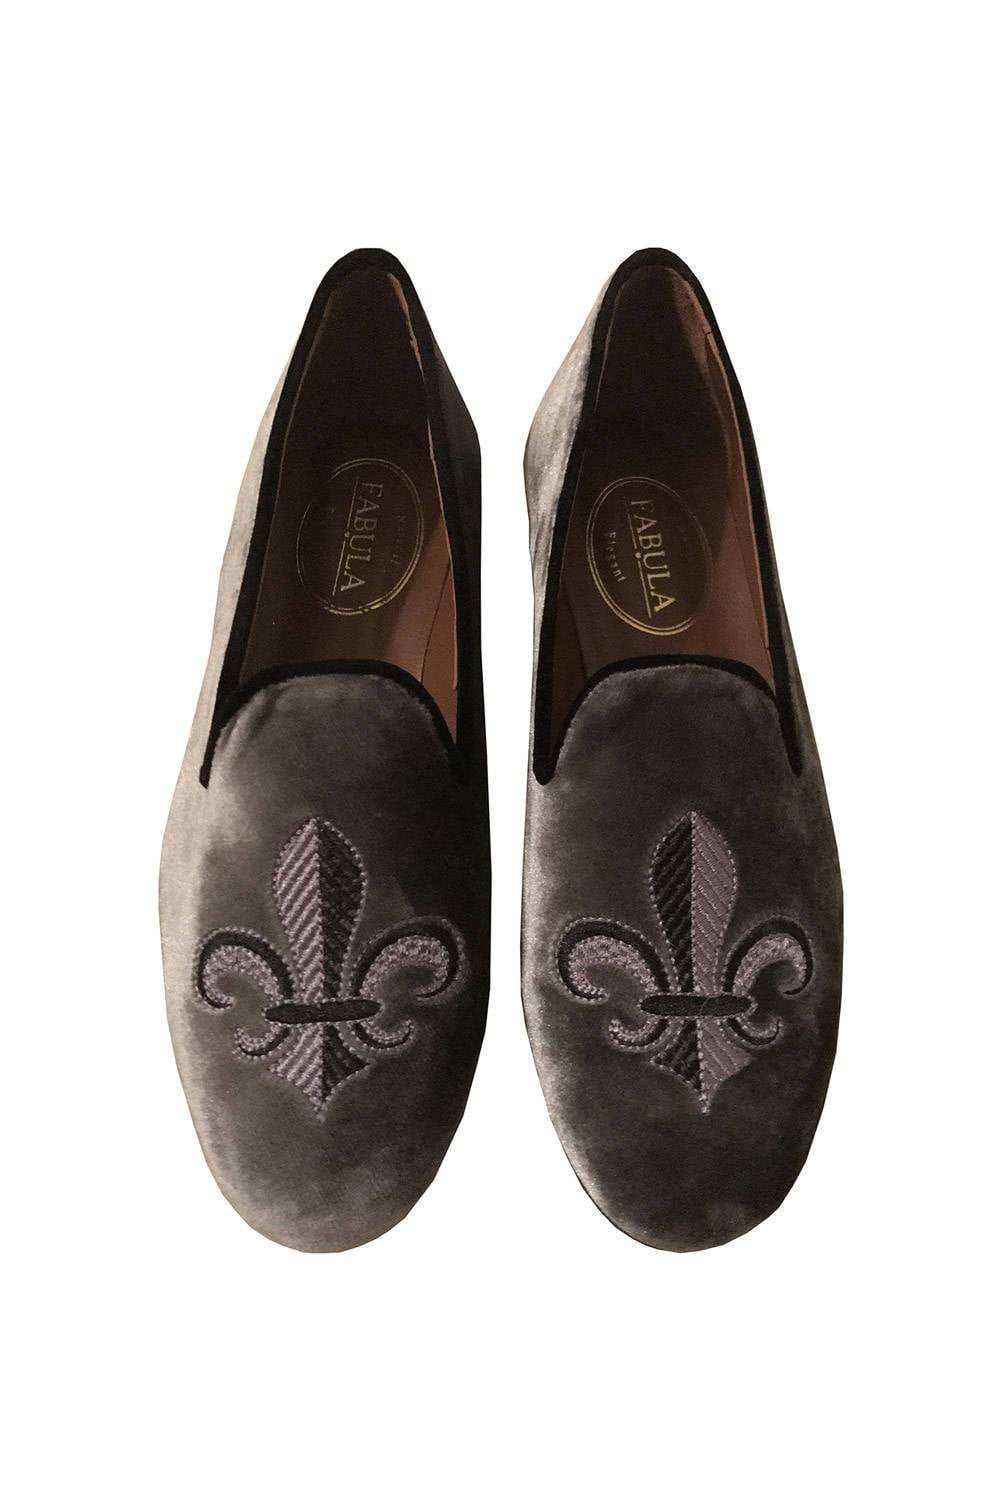 gray velvet slippers with a fleur de lis emrbroidery